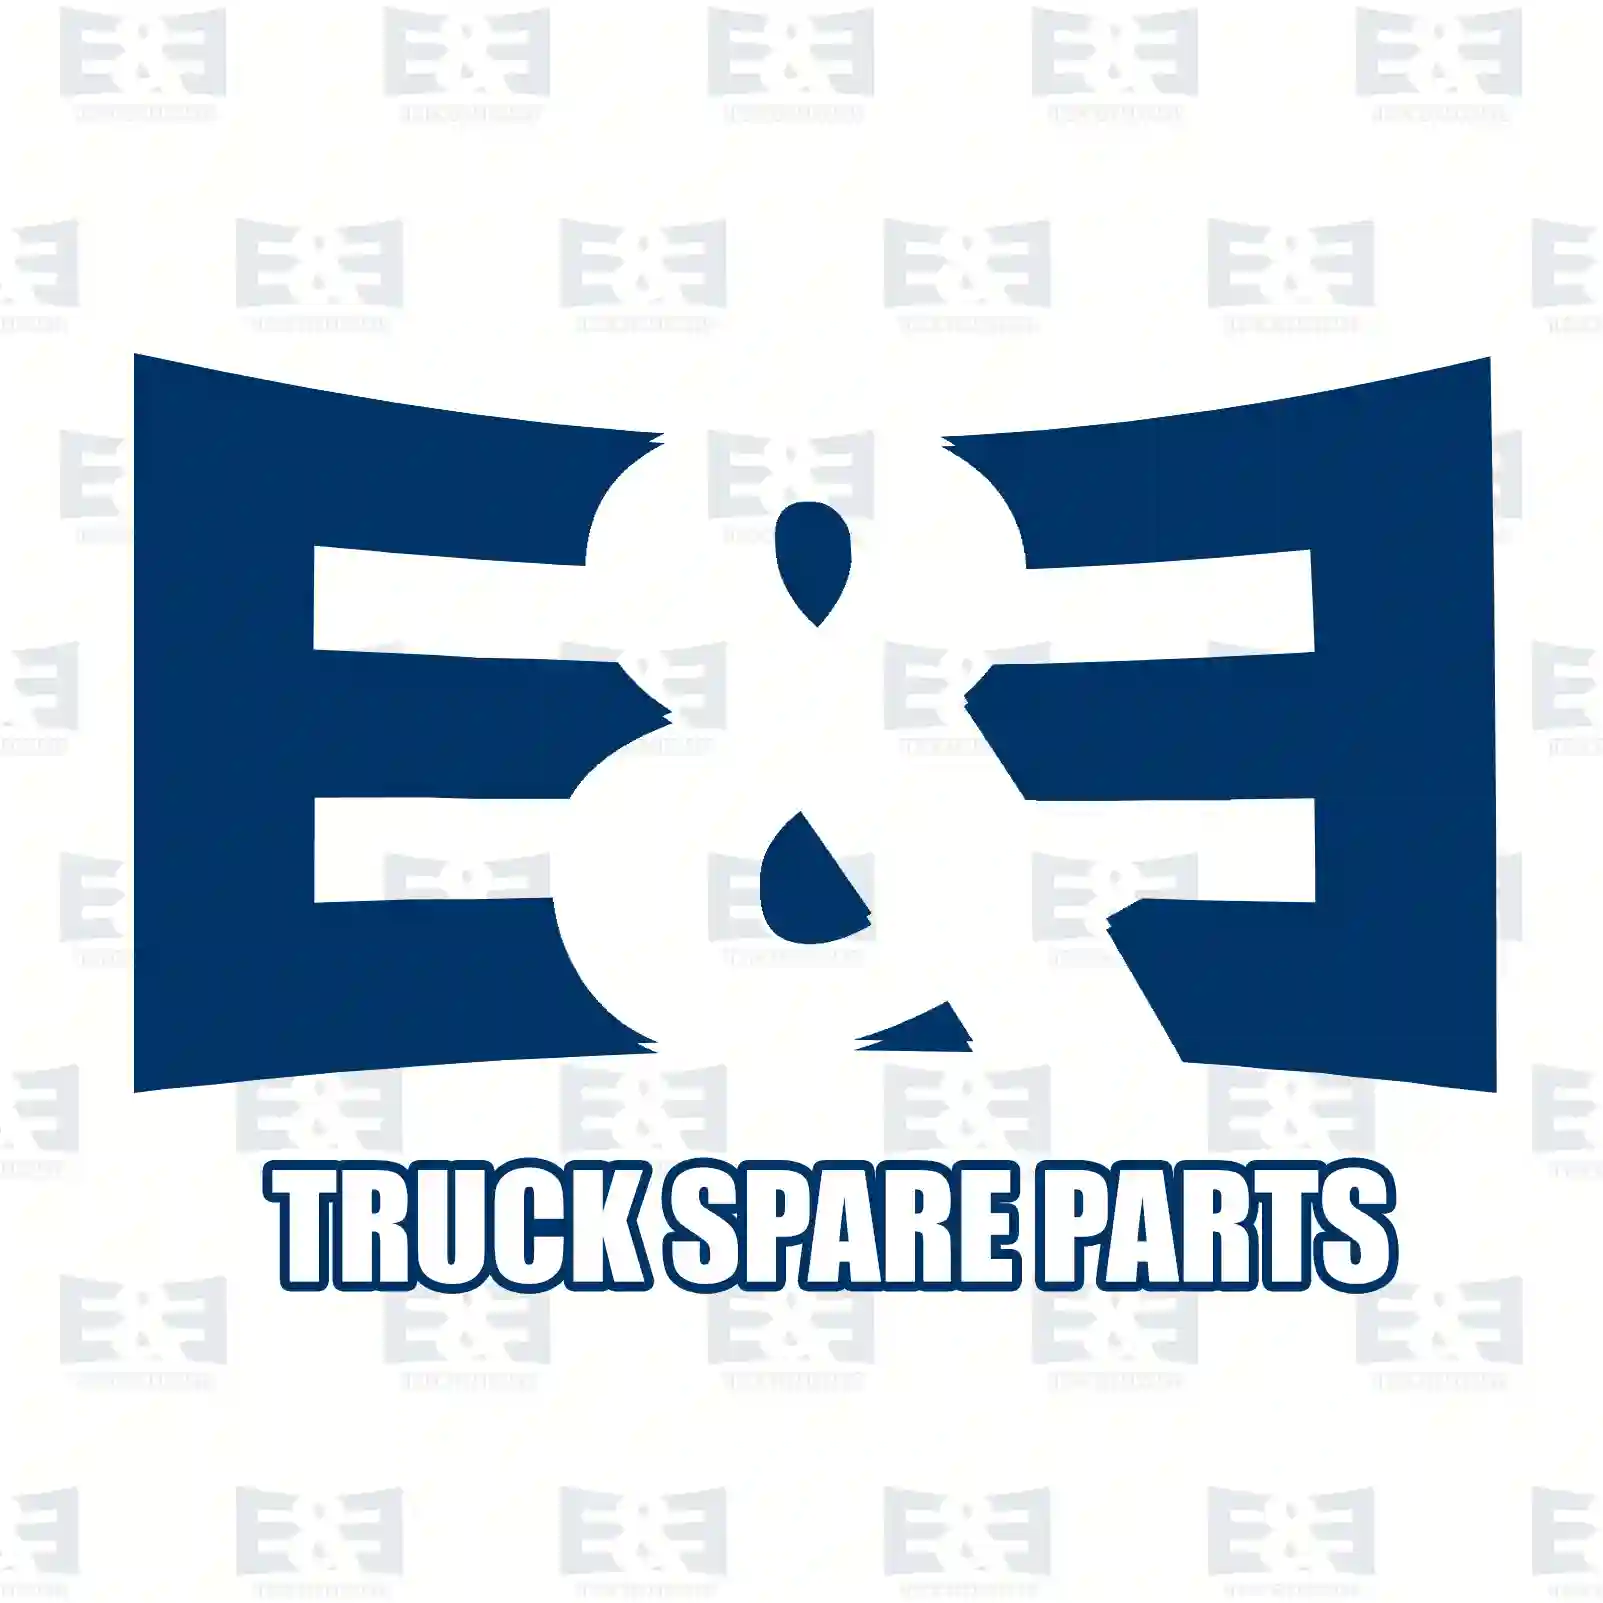  Brake power regulator || E&E Truck Spare Parts | Truck Spare Parts, Auotomotive Spare Parts